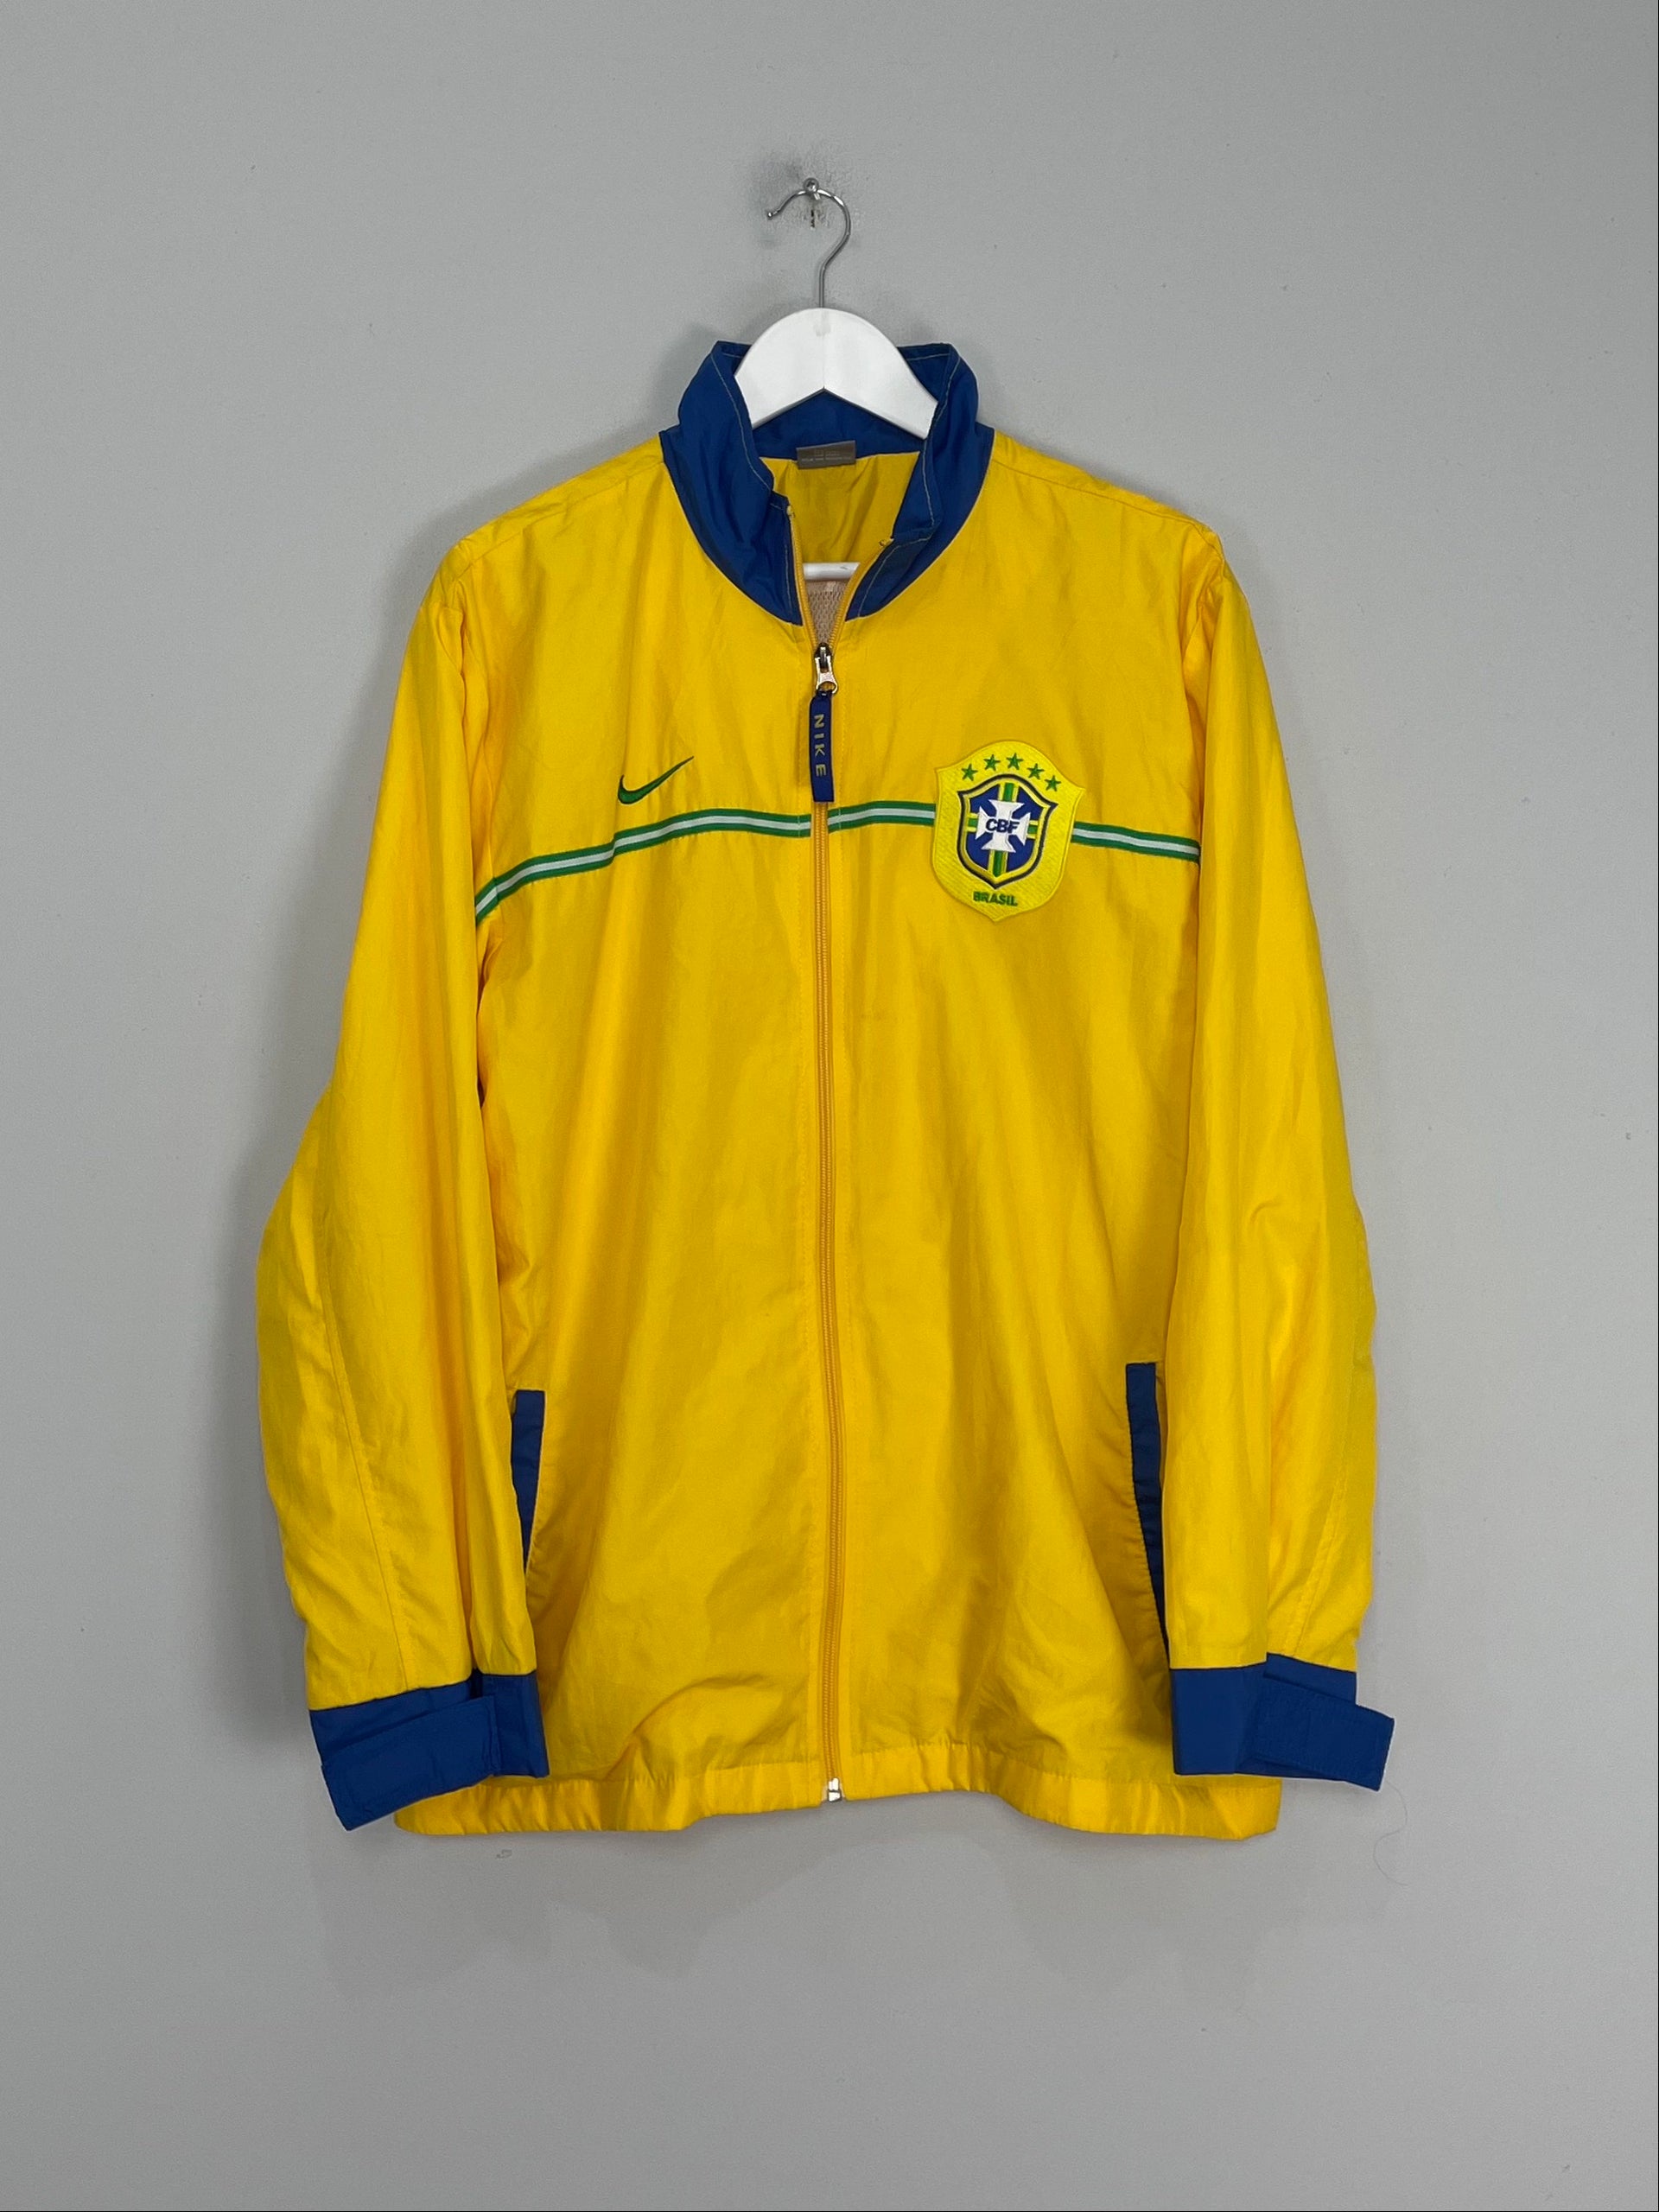 2006-08 Brazil Nike Track Jacket - 9/10 - (XL)